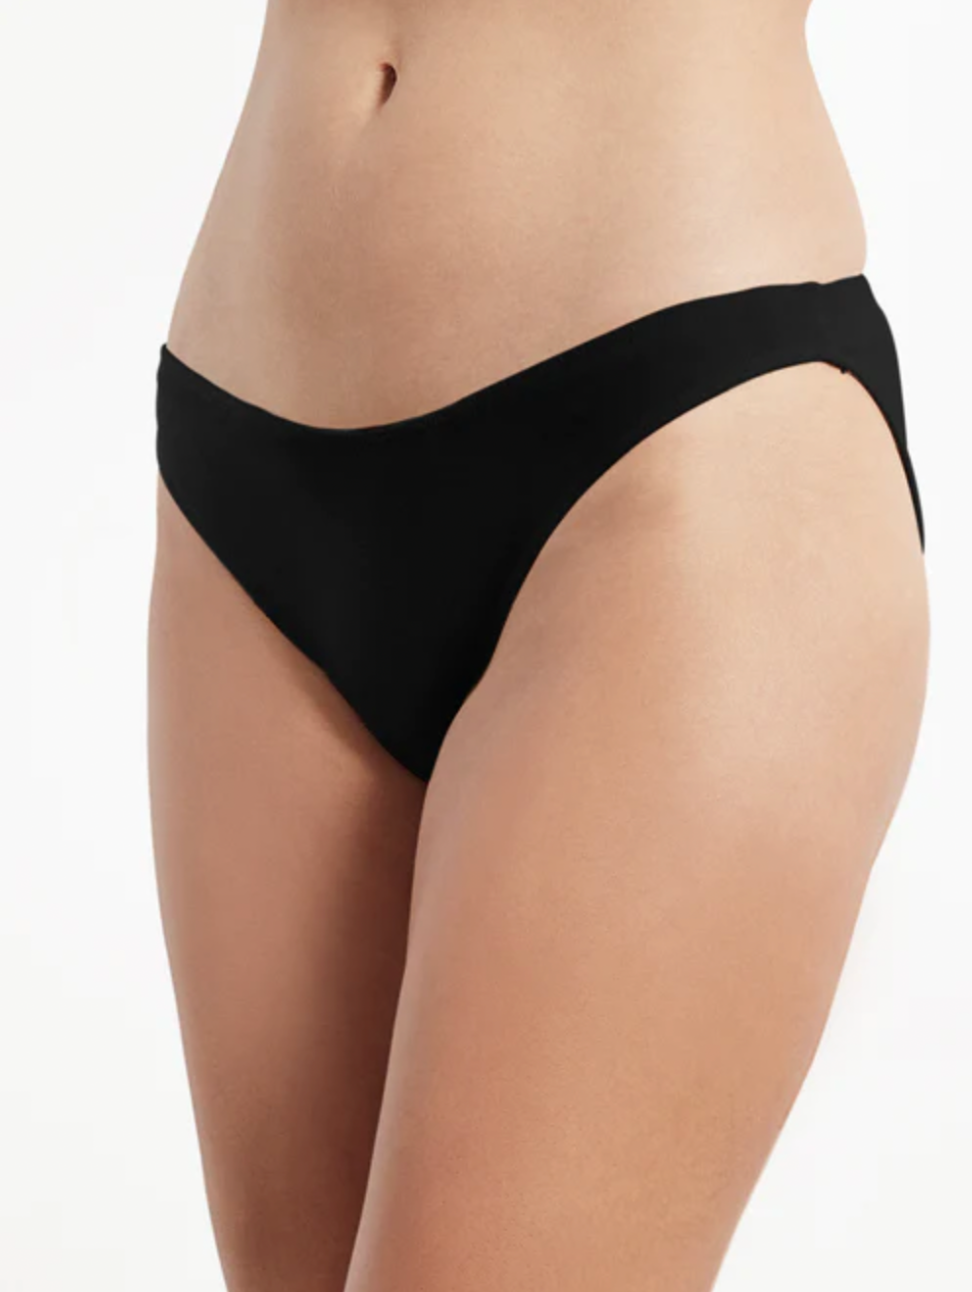 Wholesale organic cotton bikini underwear In Sexy And Comfortable Styles 